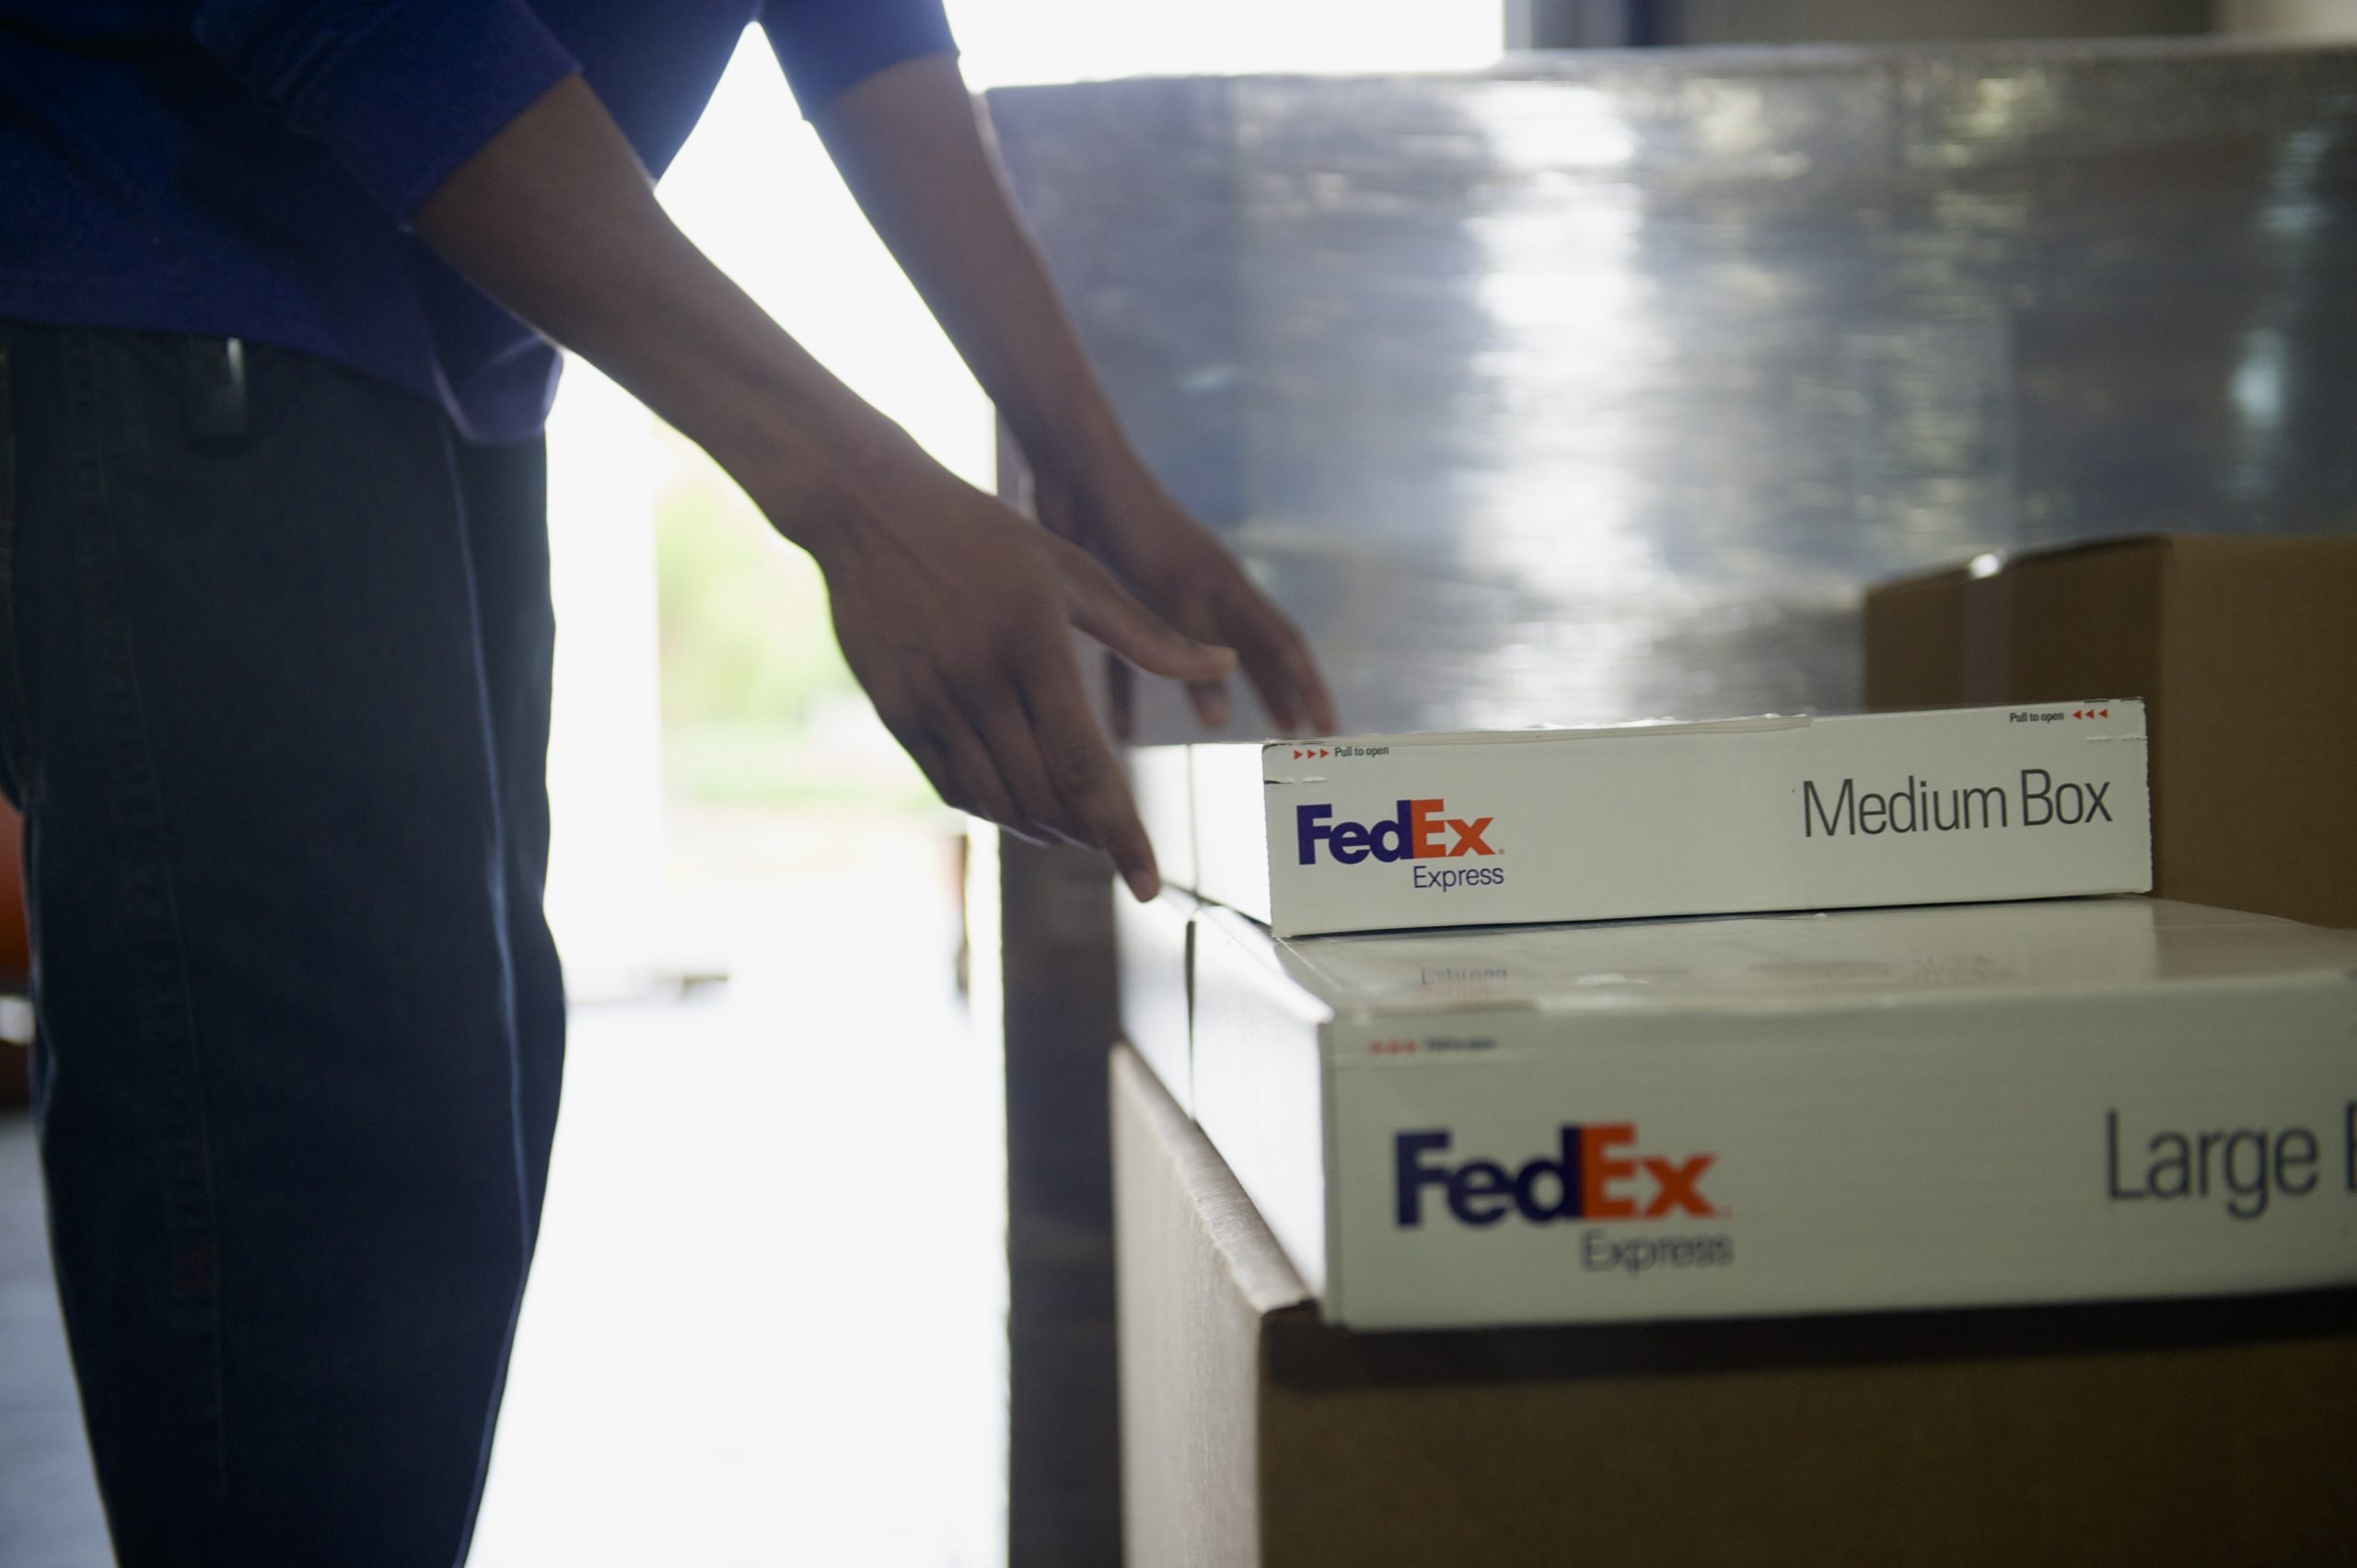 Multiple Margaret residents report missing FedEx packages